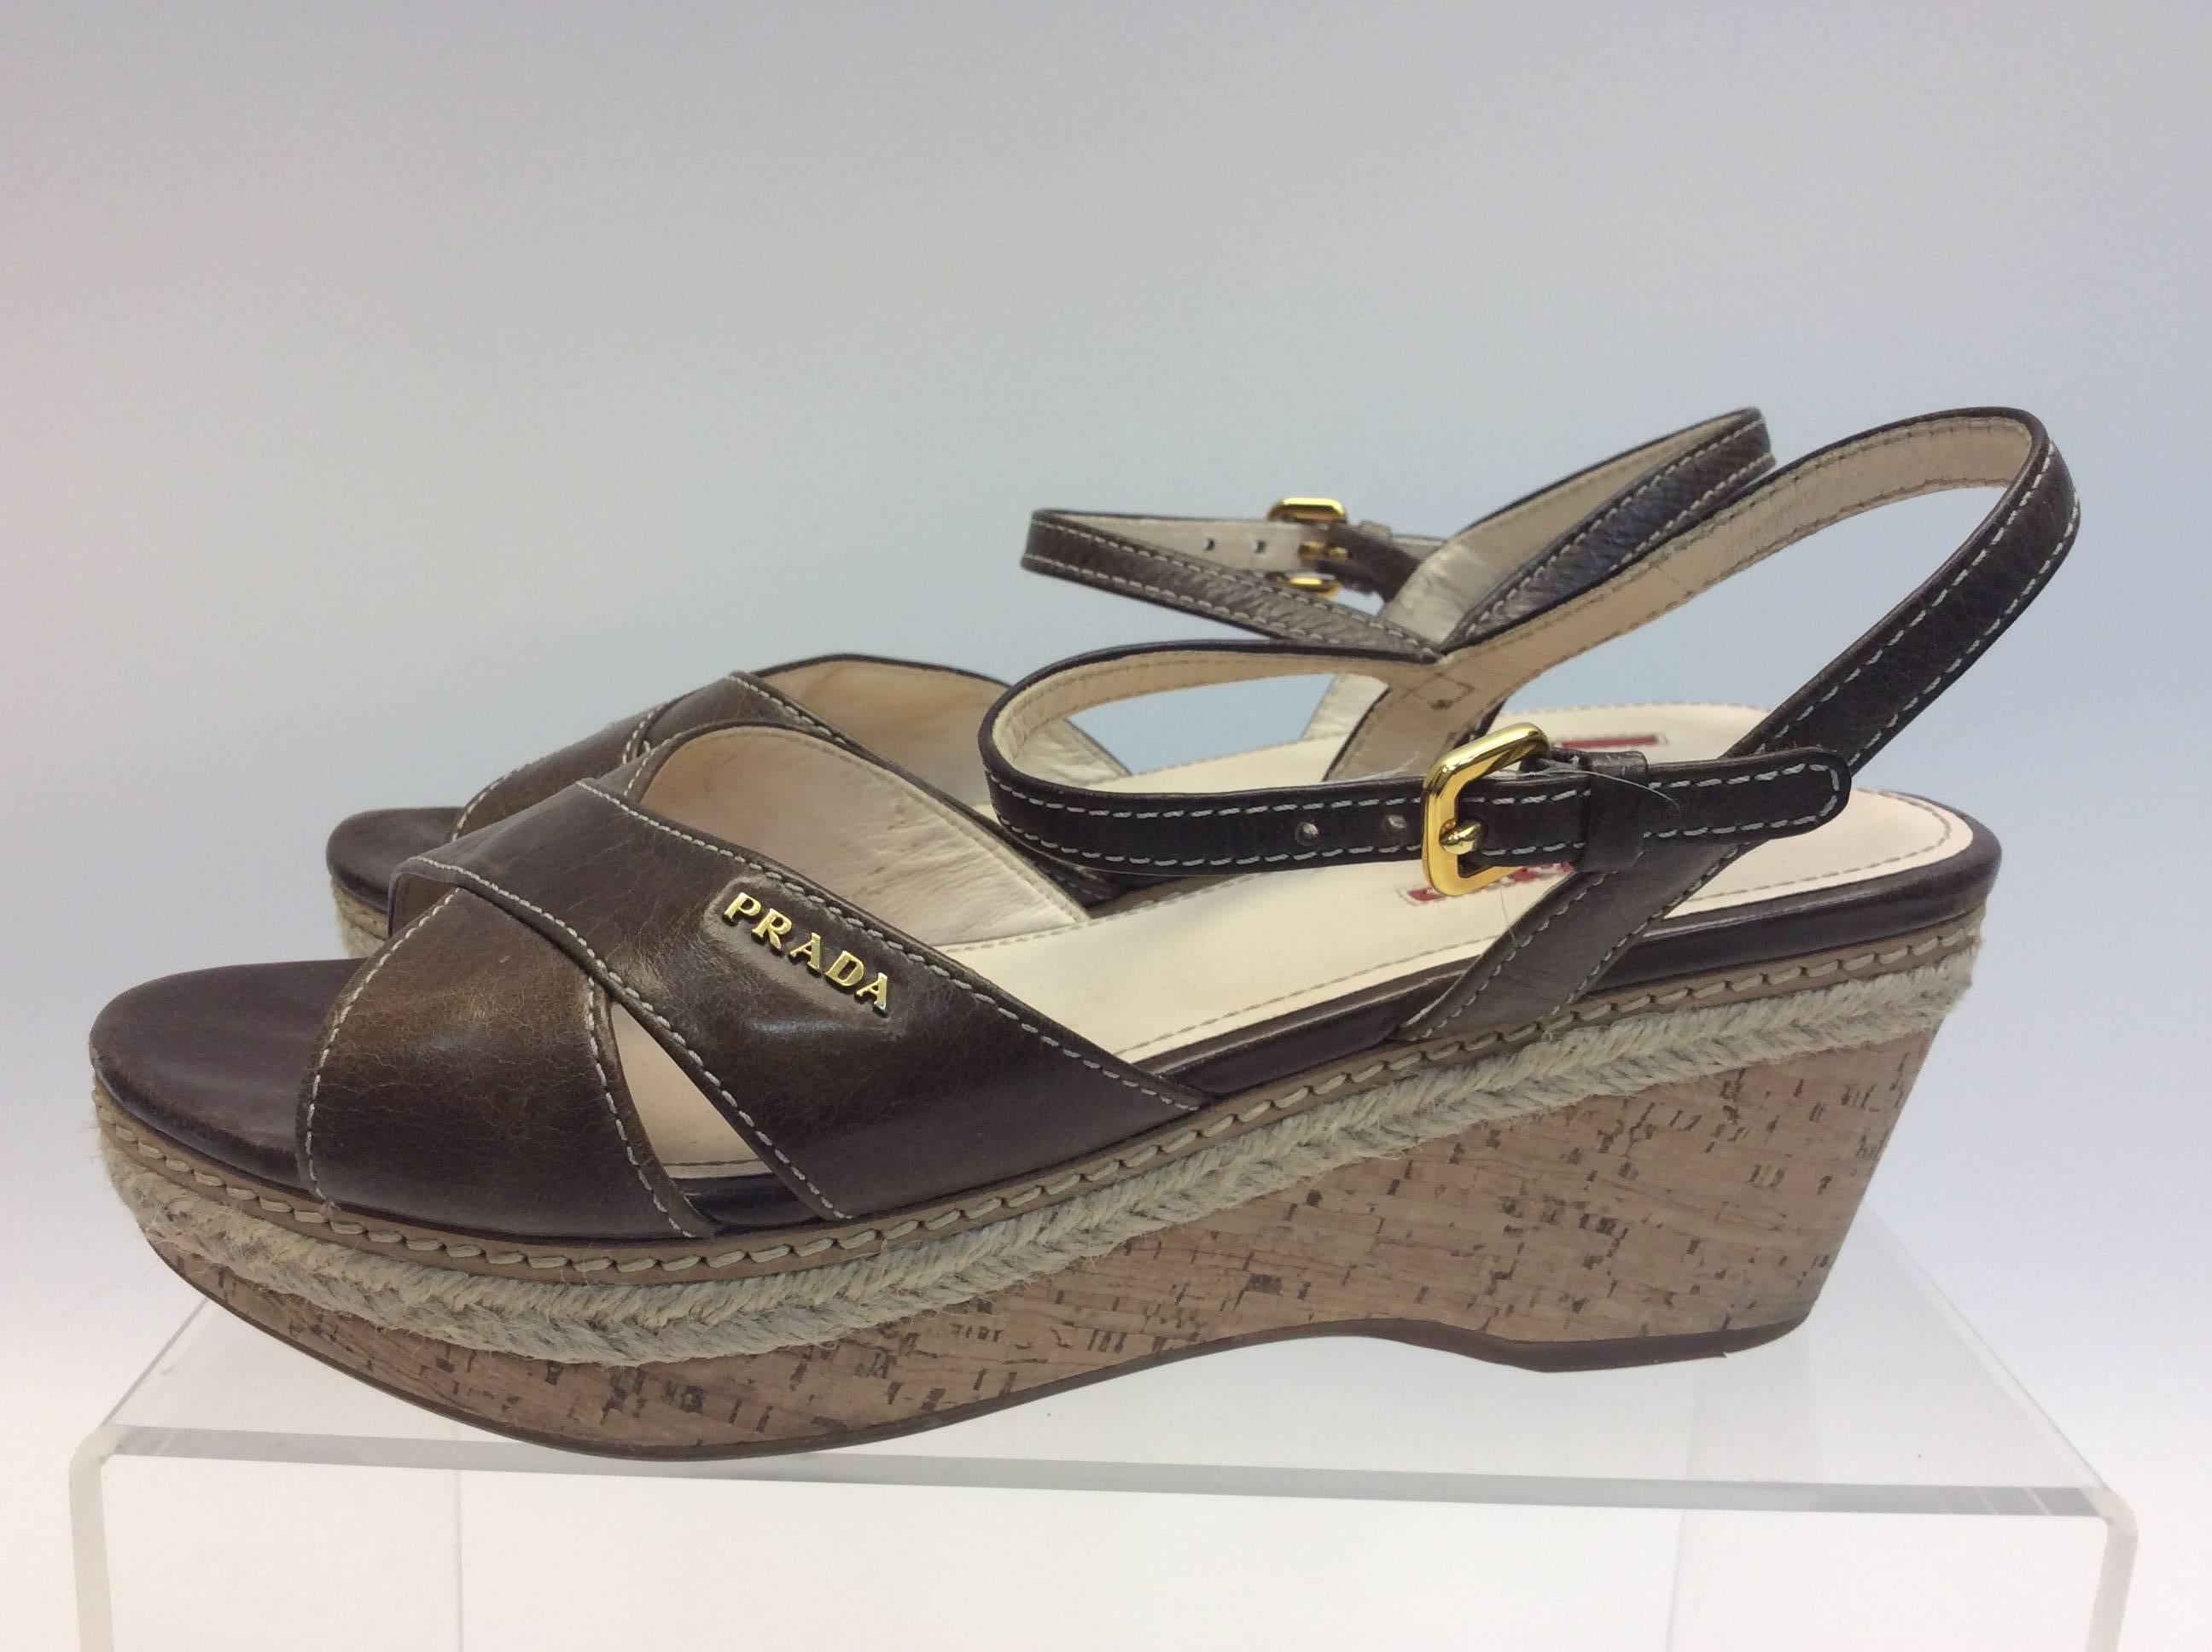 Prada Brown Leather Wedge Sandal
$136
Leather
Size 38.5
1” platform 
2.5” heel

